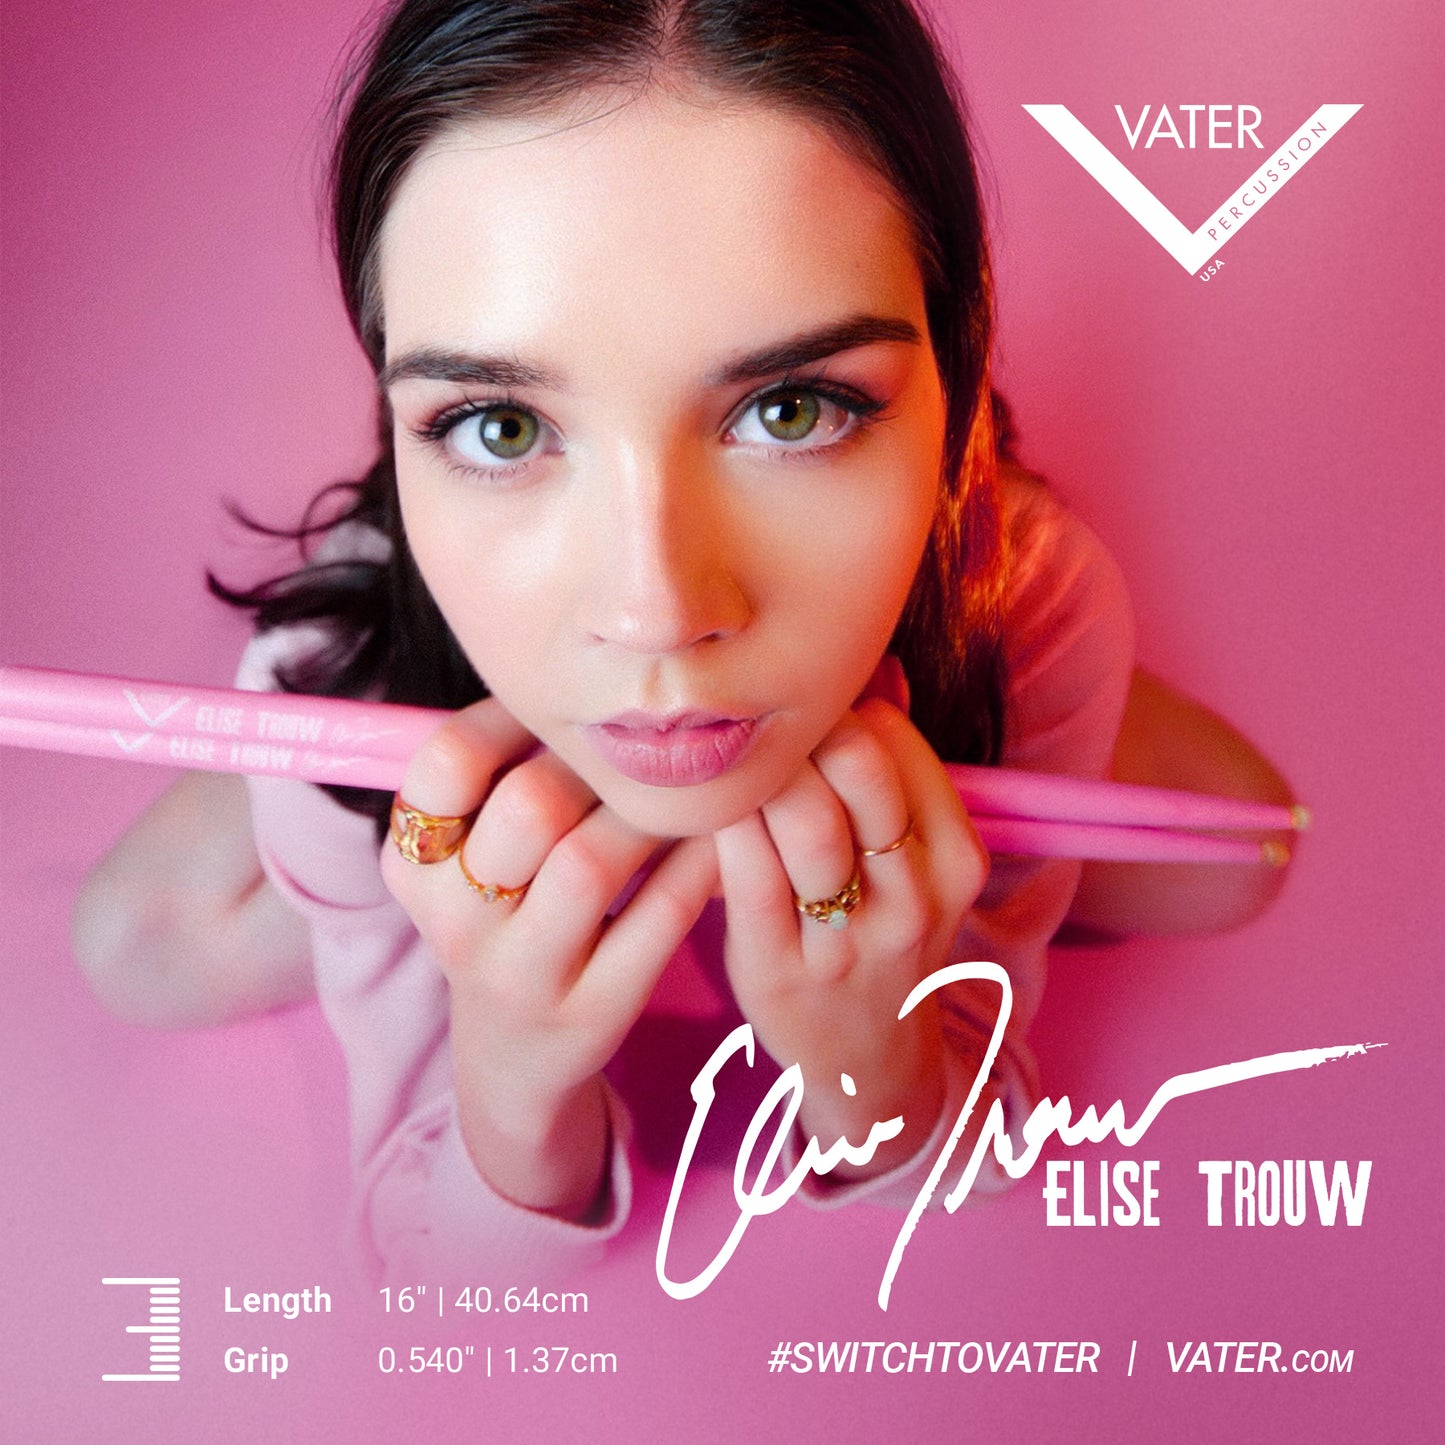 ET signature Vater pink drumsticks promotional image Elise Trouw